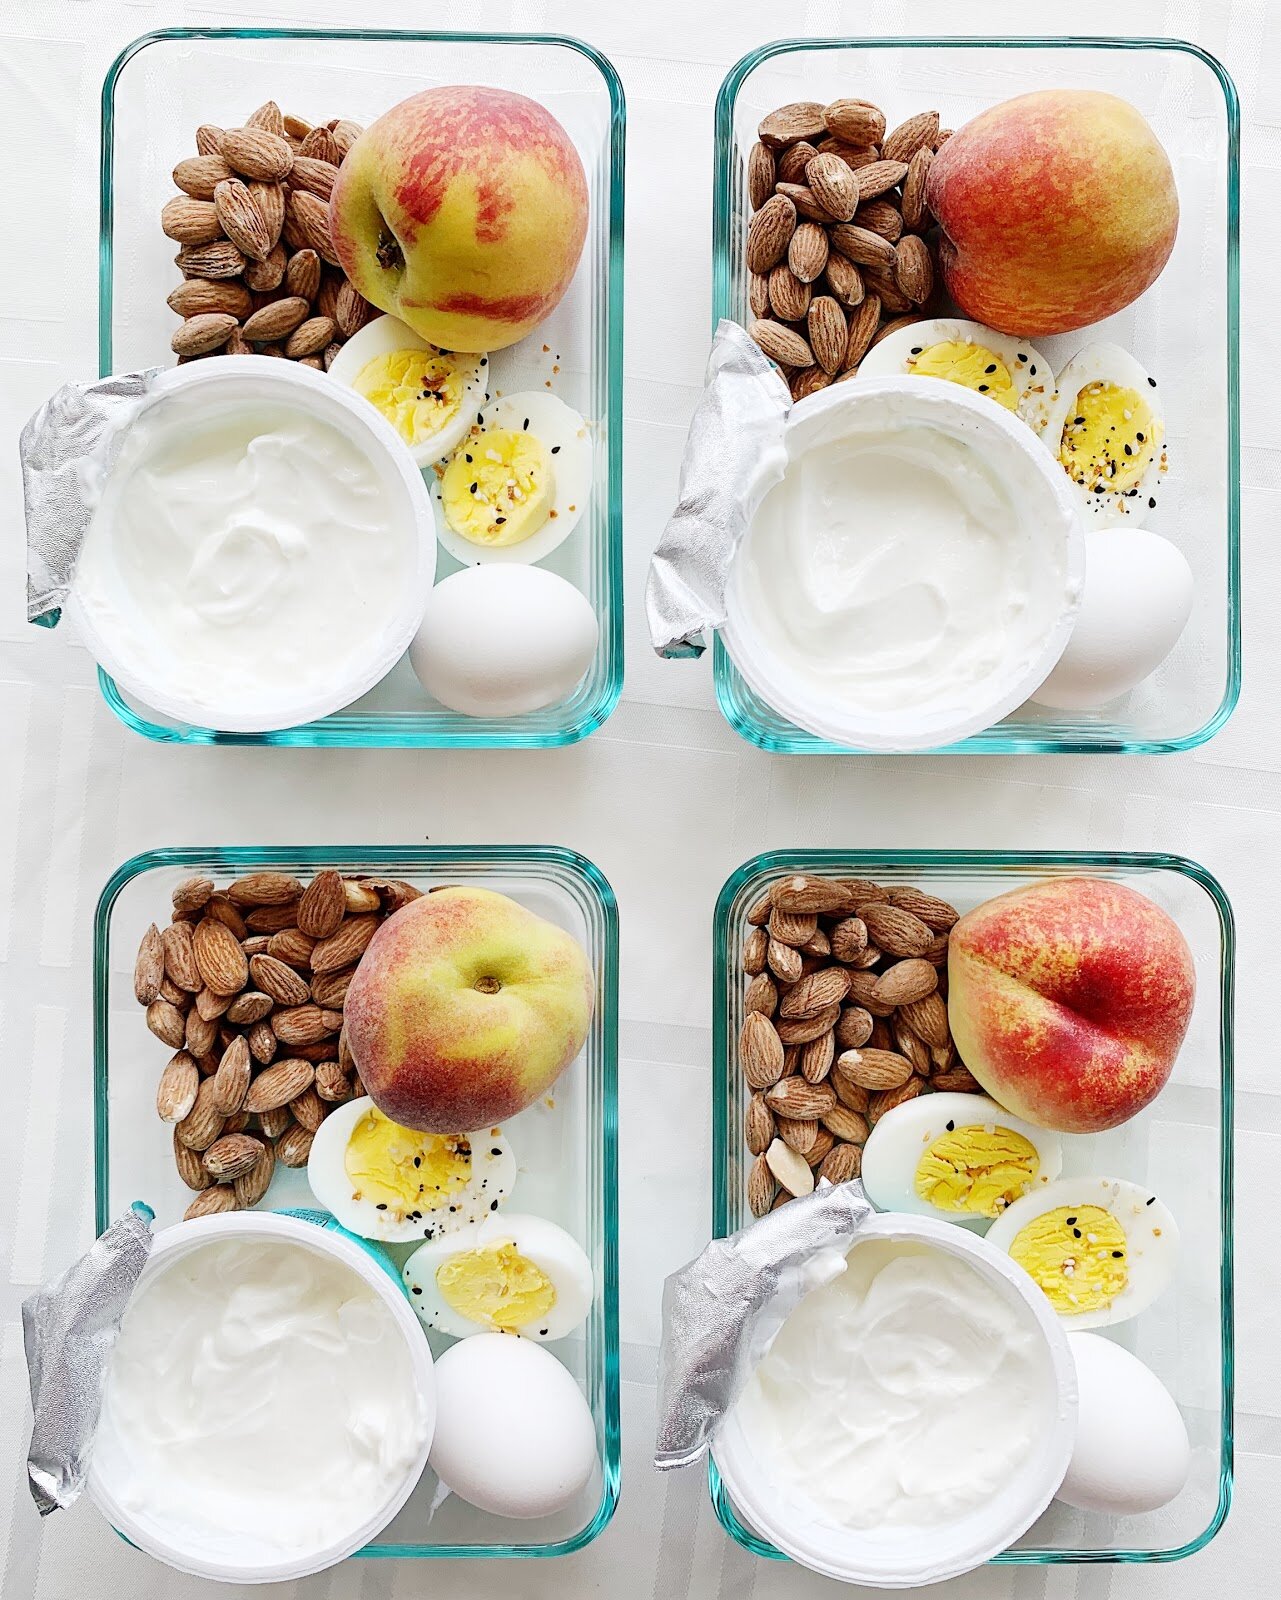 10 Breakfast Meal Prep Bento Boxes